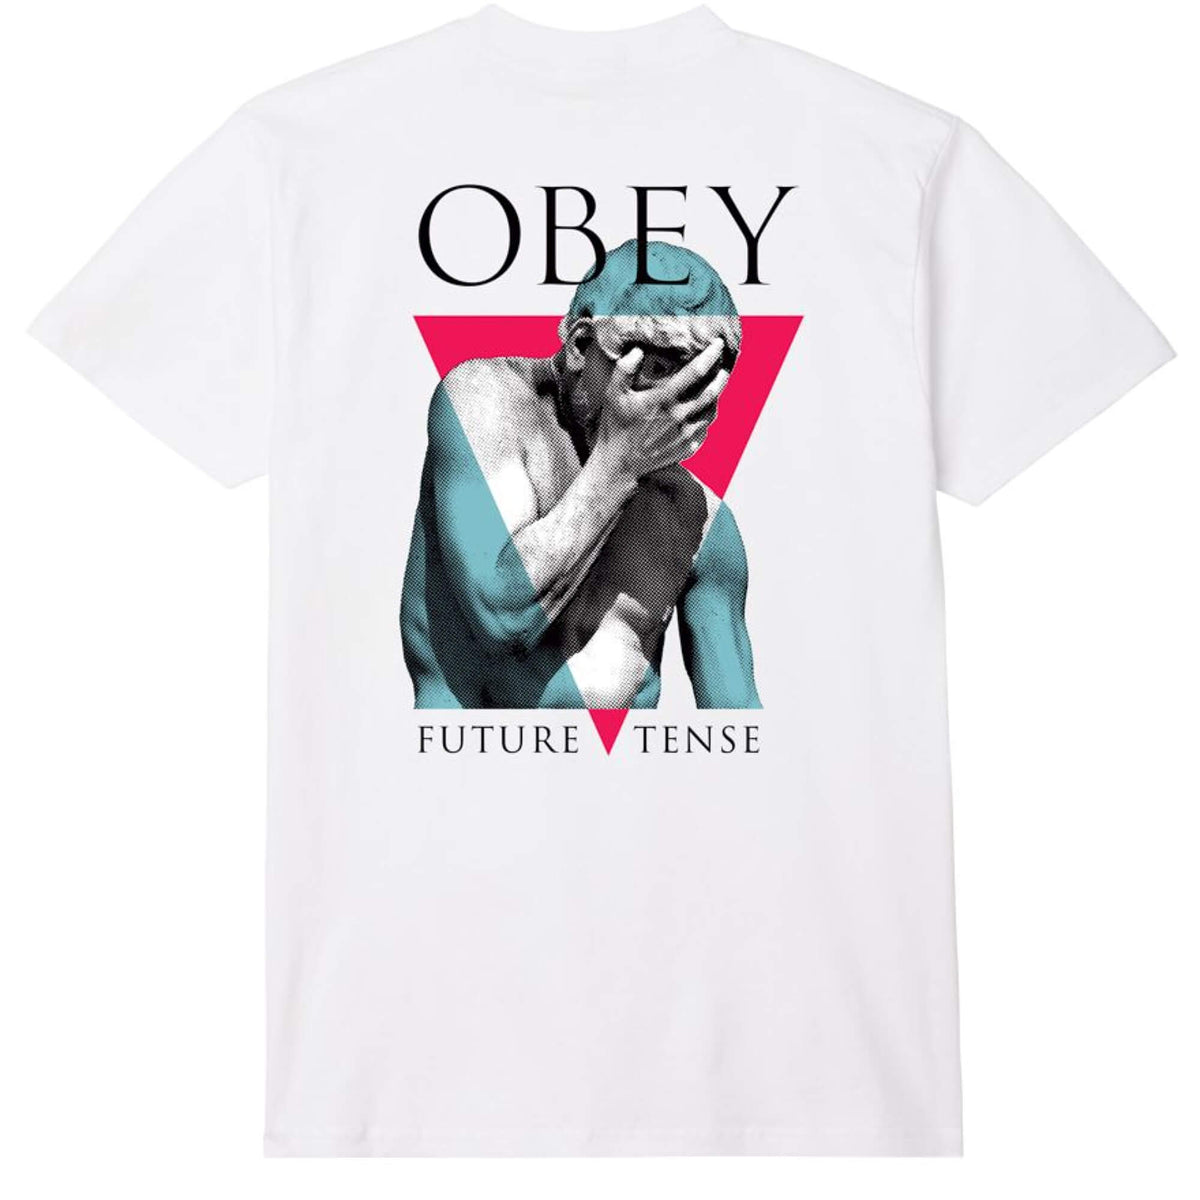 OBEY Future Tense Skateboarding T-Shirt White